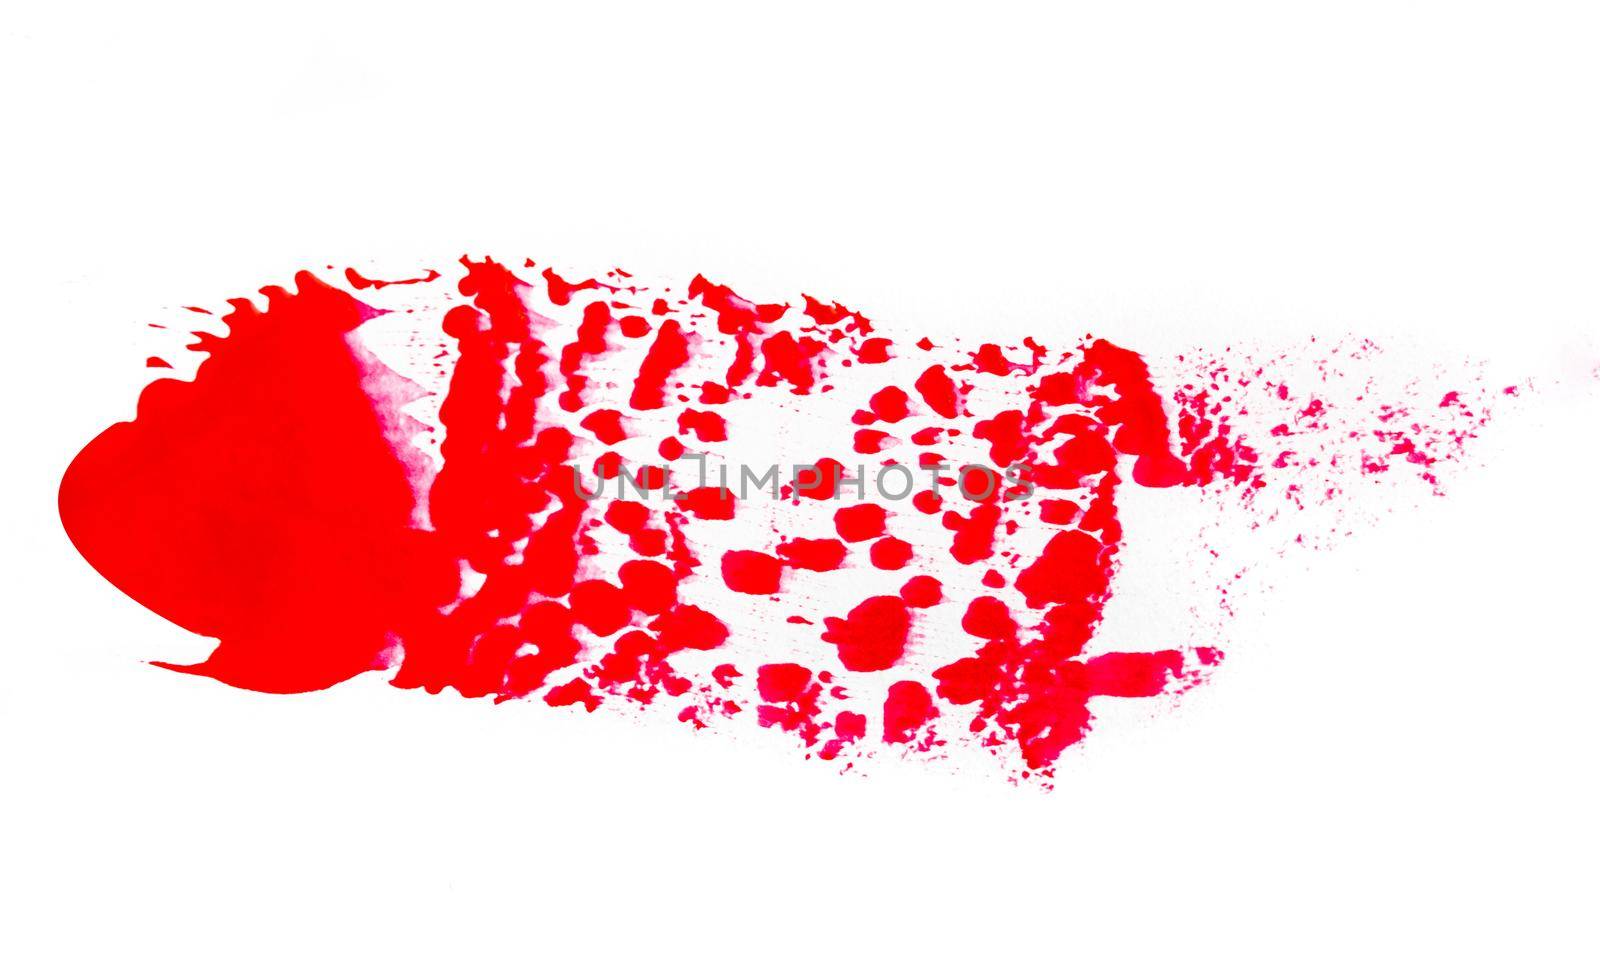 Bright red spills on white background